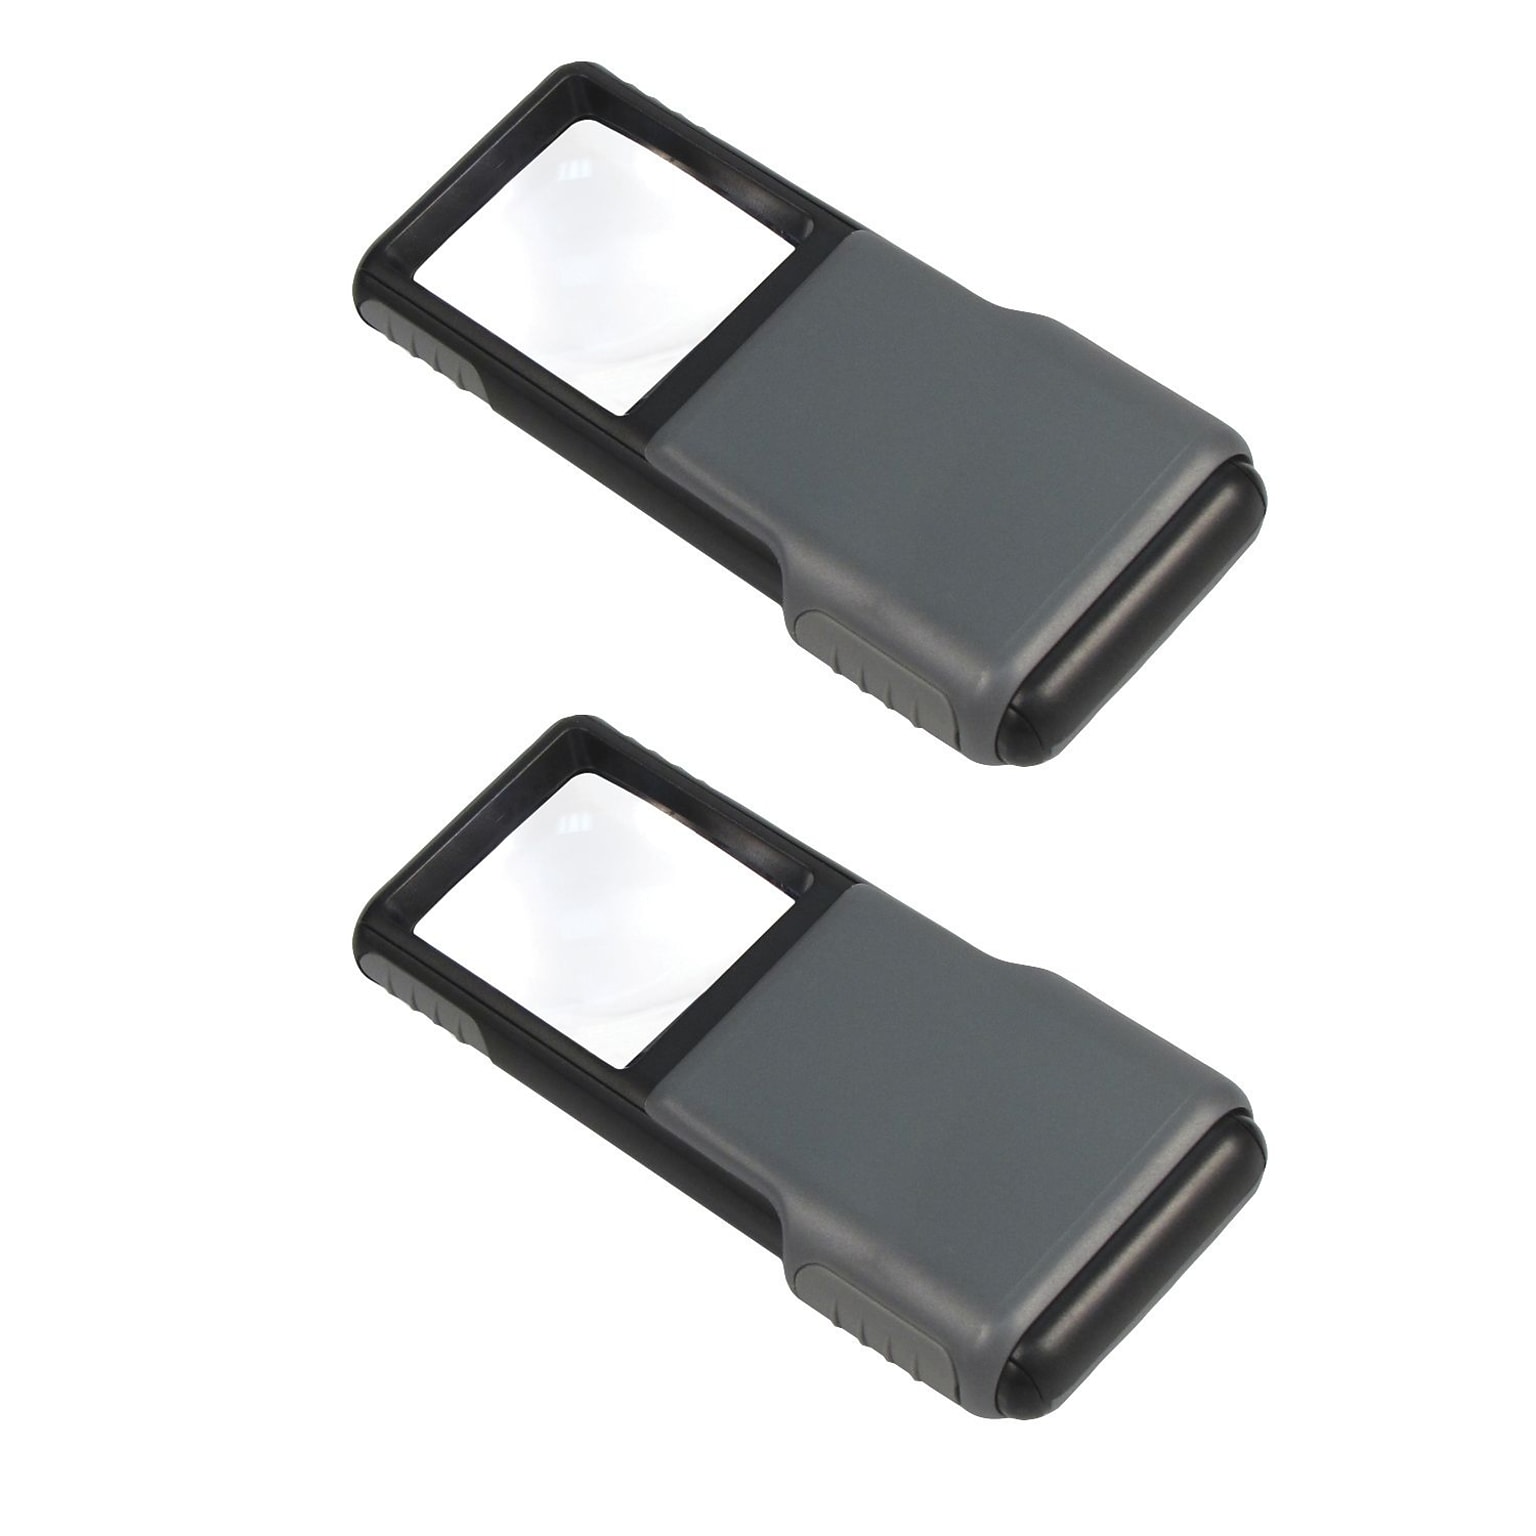 Carson Minibrite Pocket 5x Magnifier, 2-Pack (818549020355)